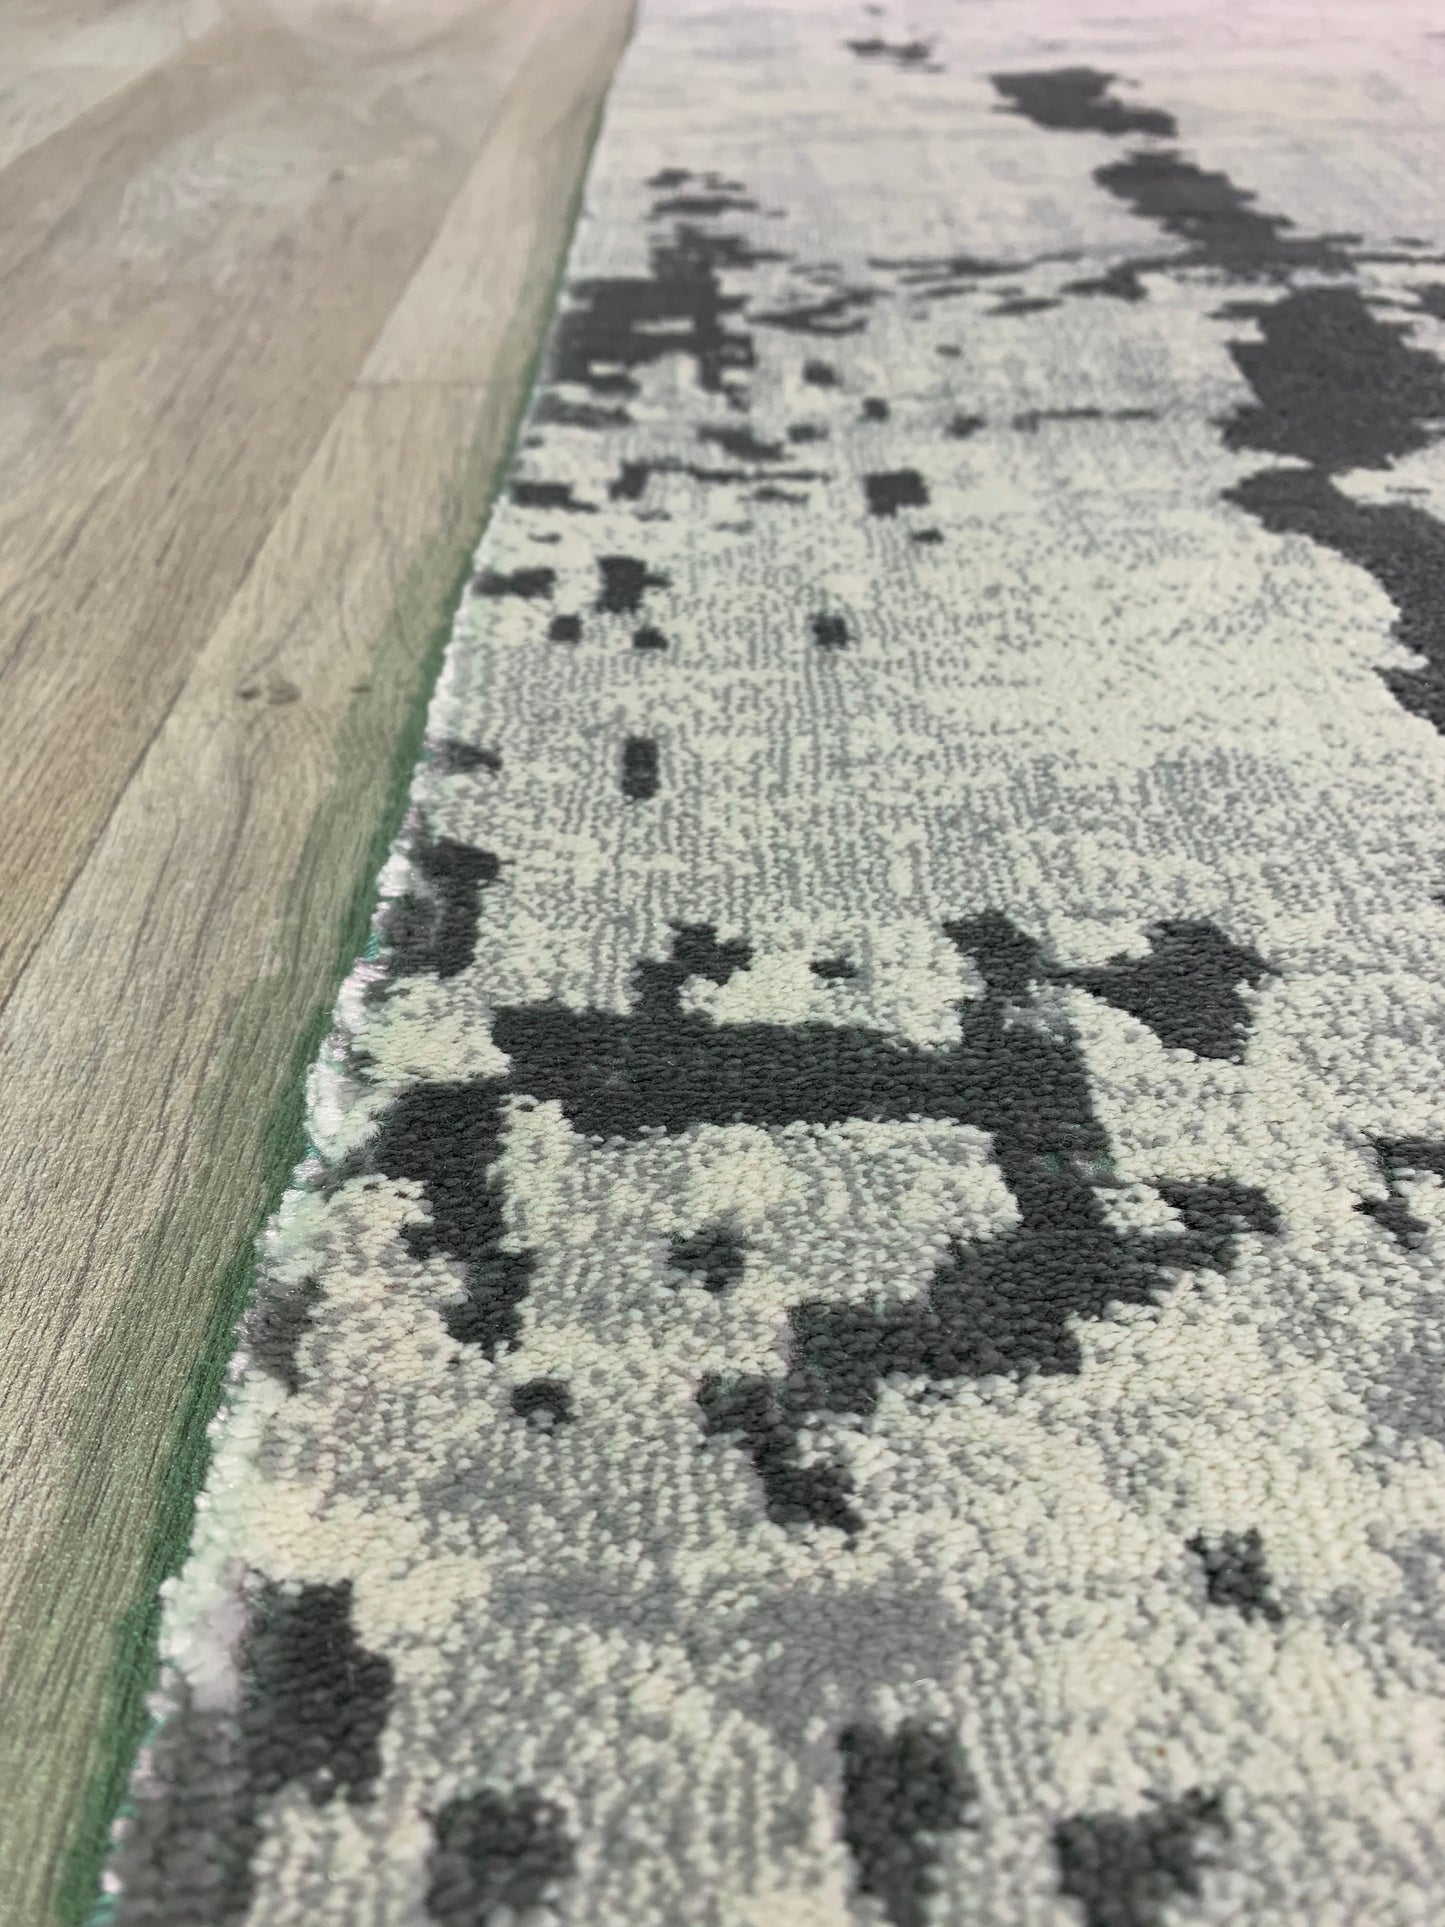 FL-201: Synthetic fiber rug